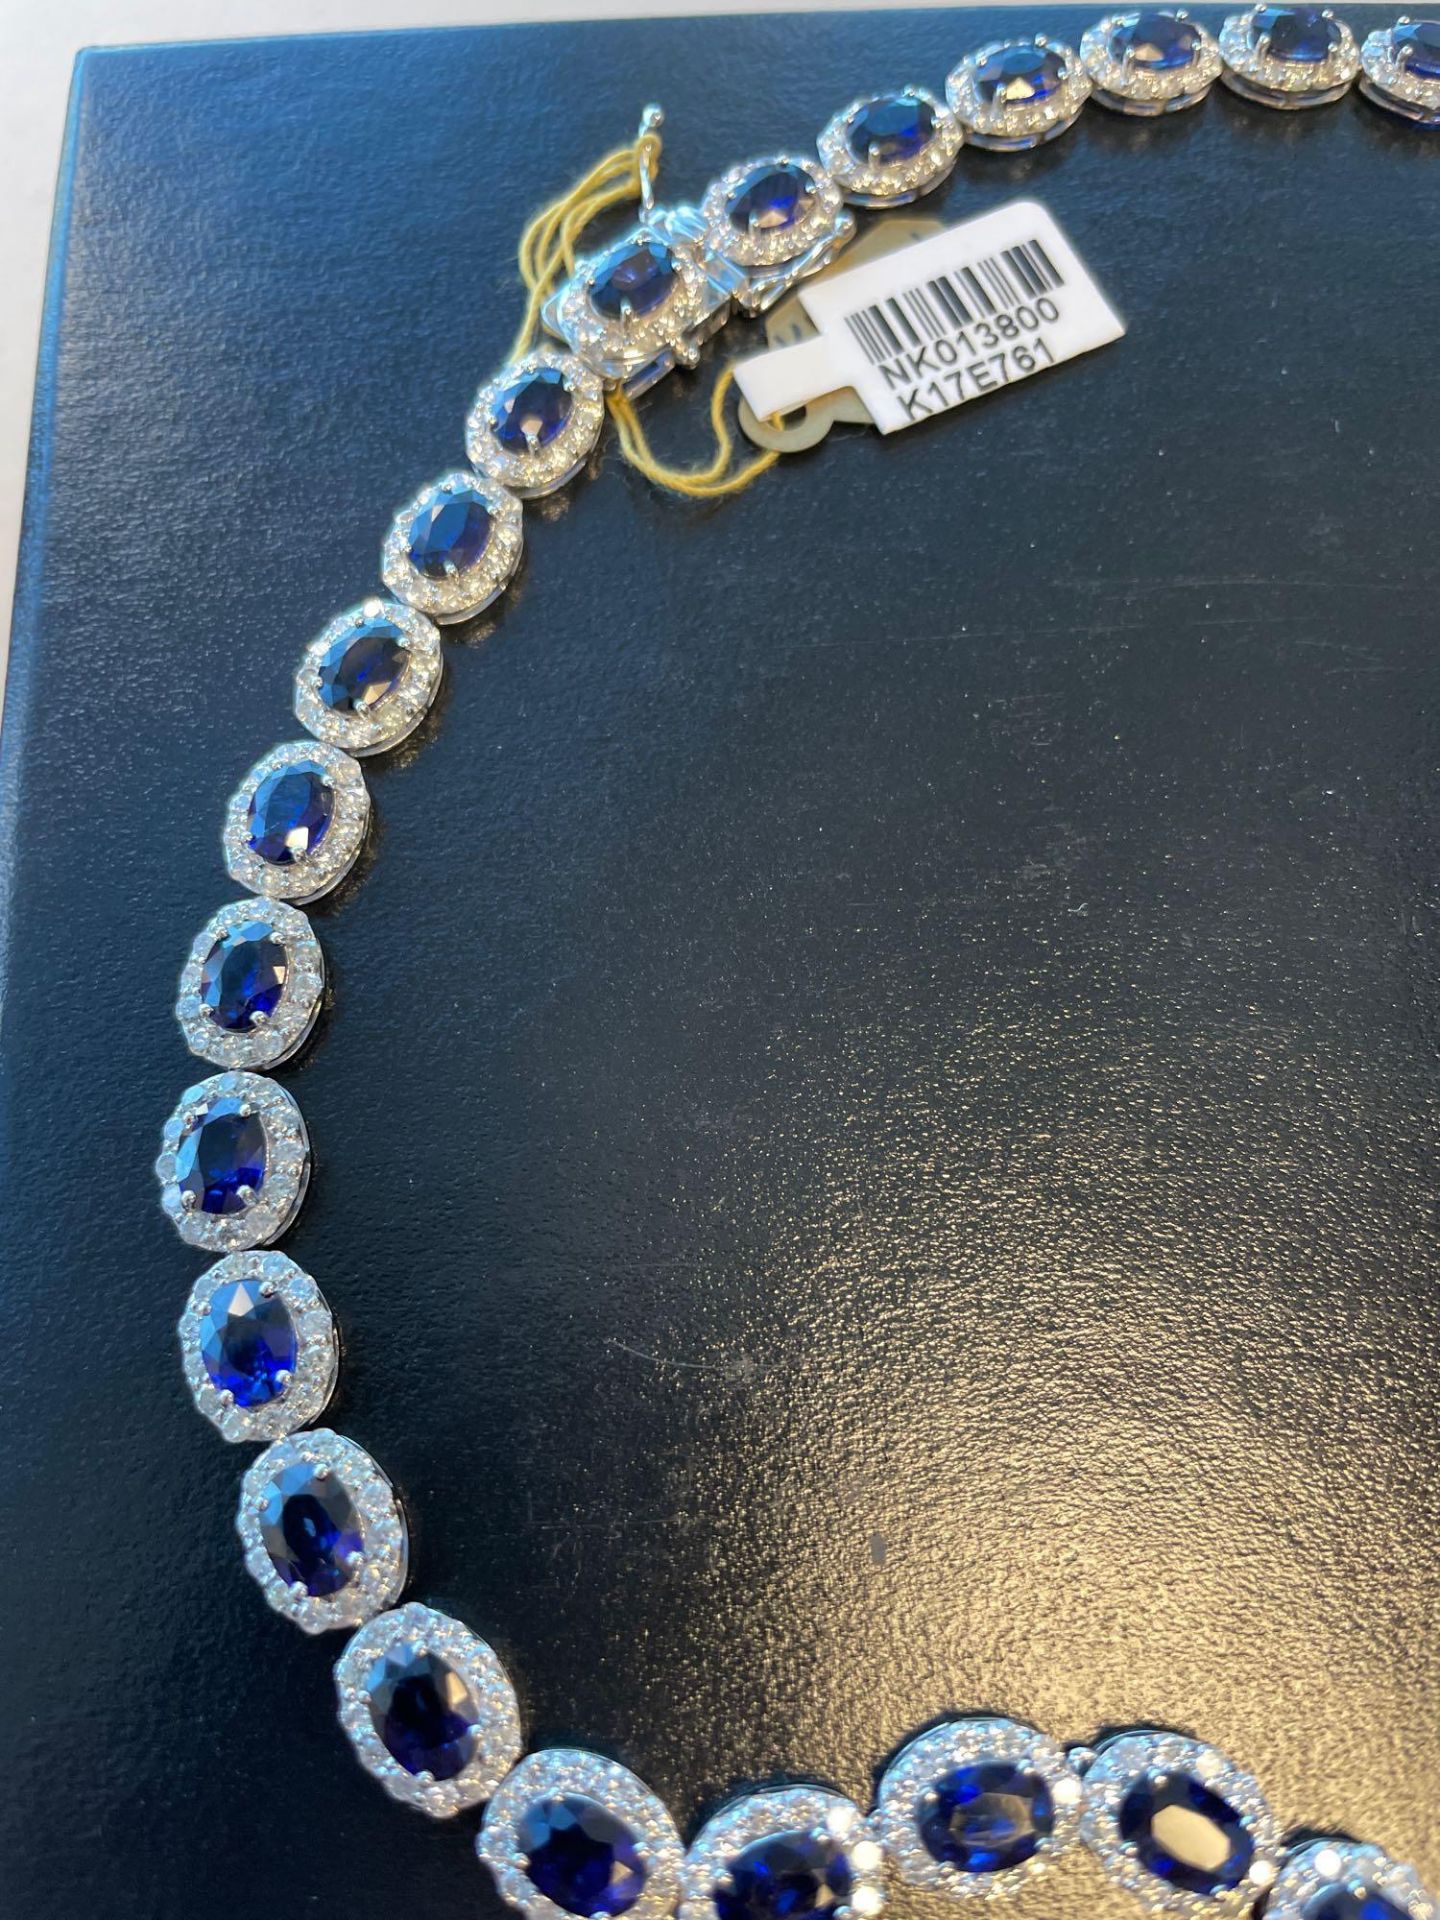 14kt White Gold ladies cast & assembled Blue Sapphire Diamond Necklace - Image 3 of 5